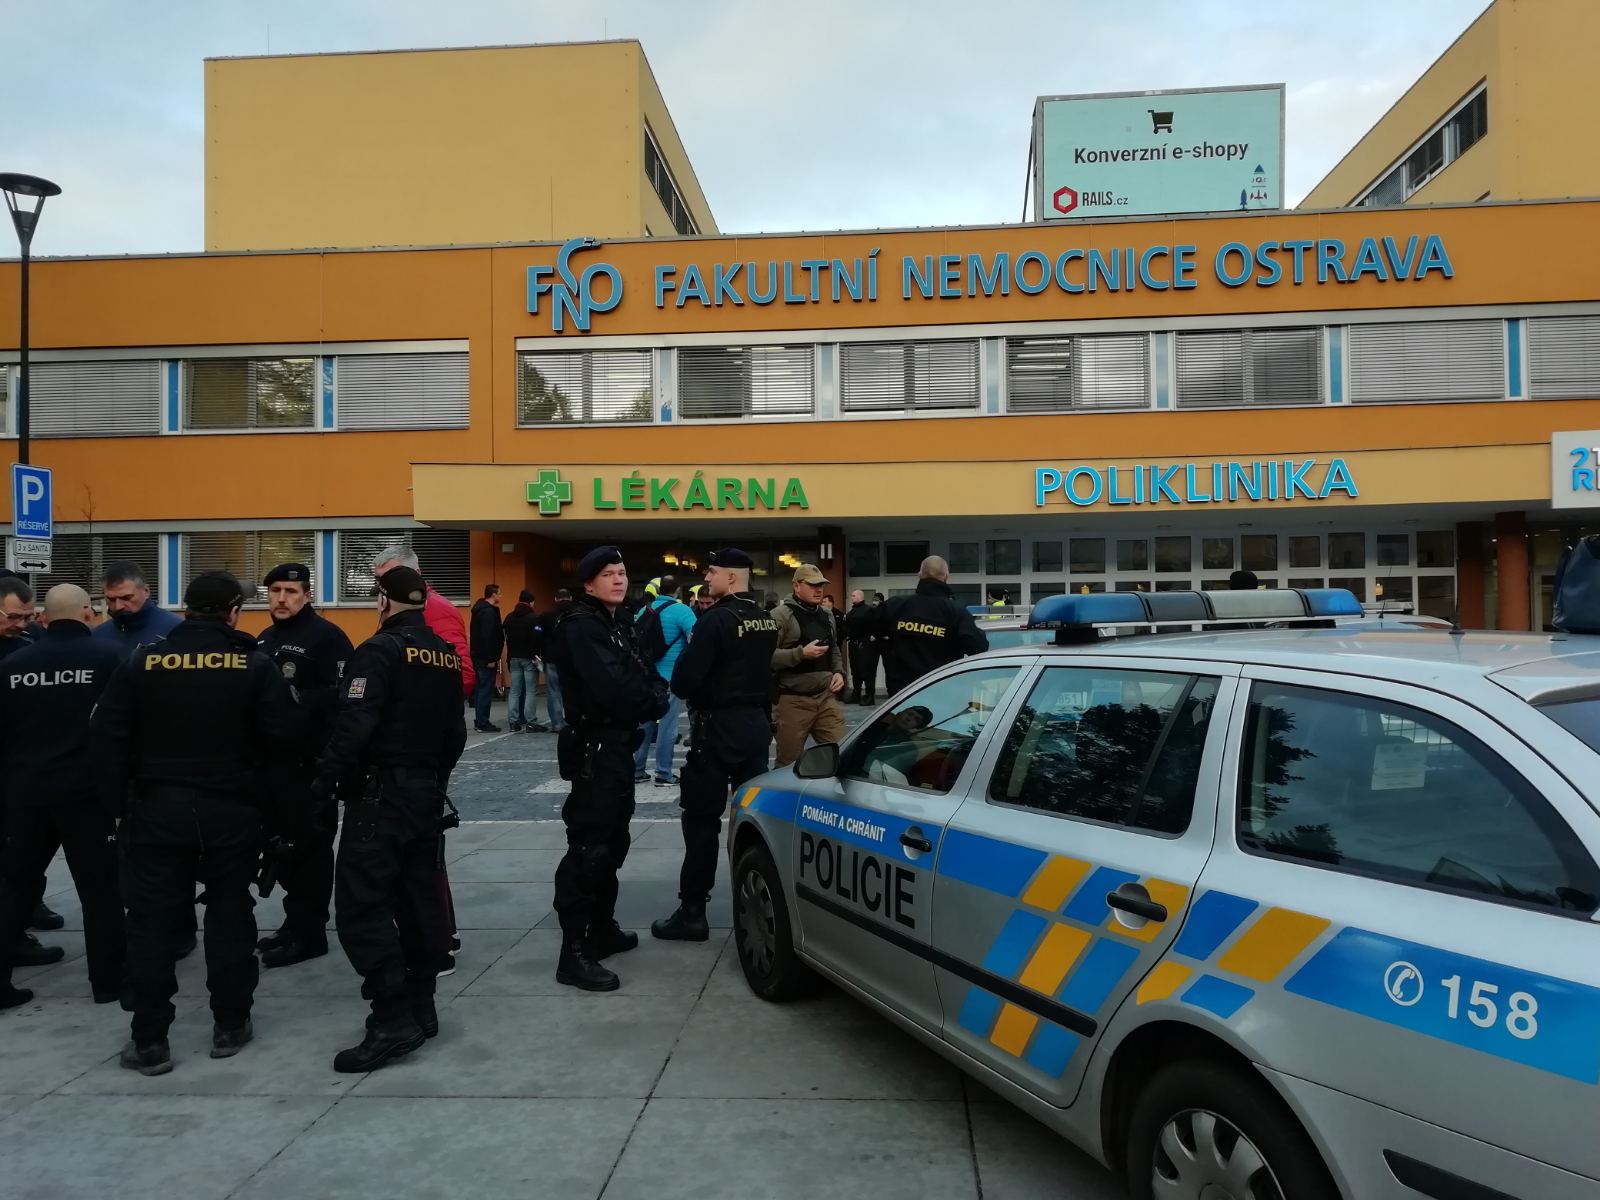 Ostrava hospital shooting: At least 6 killed; suspect dead